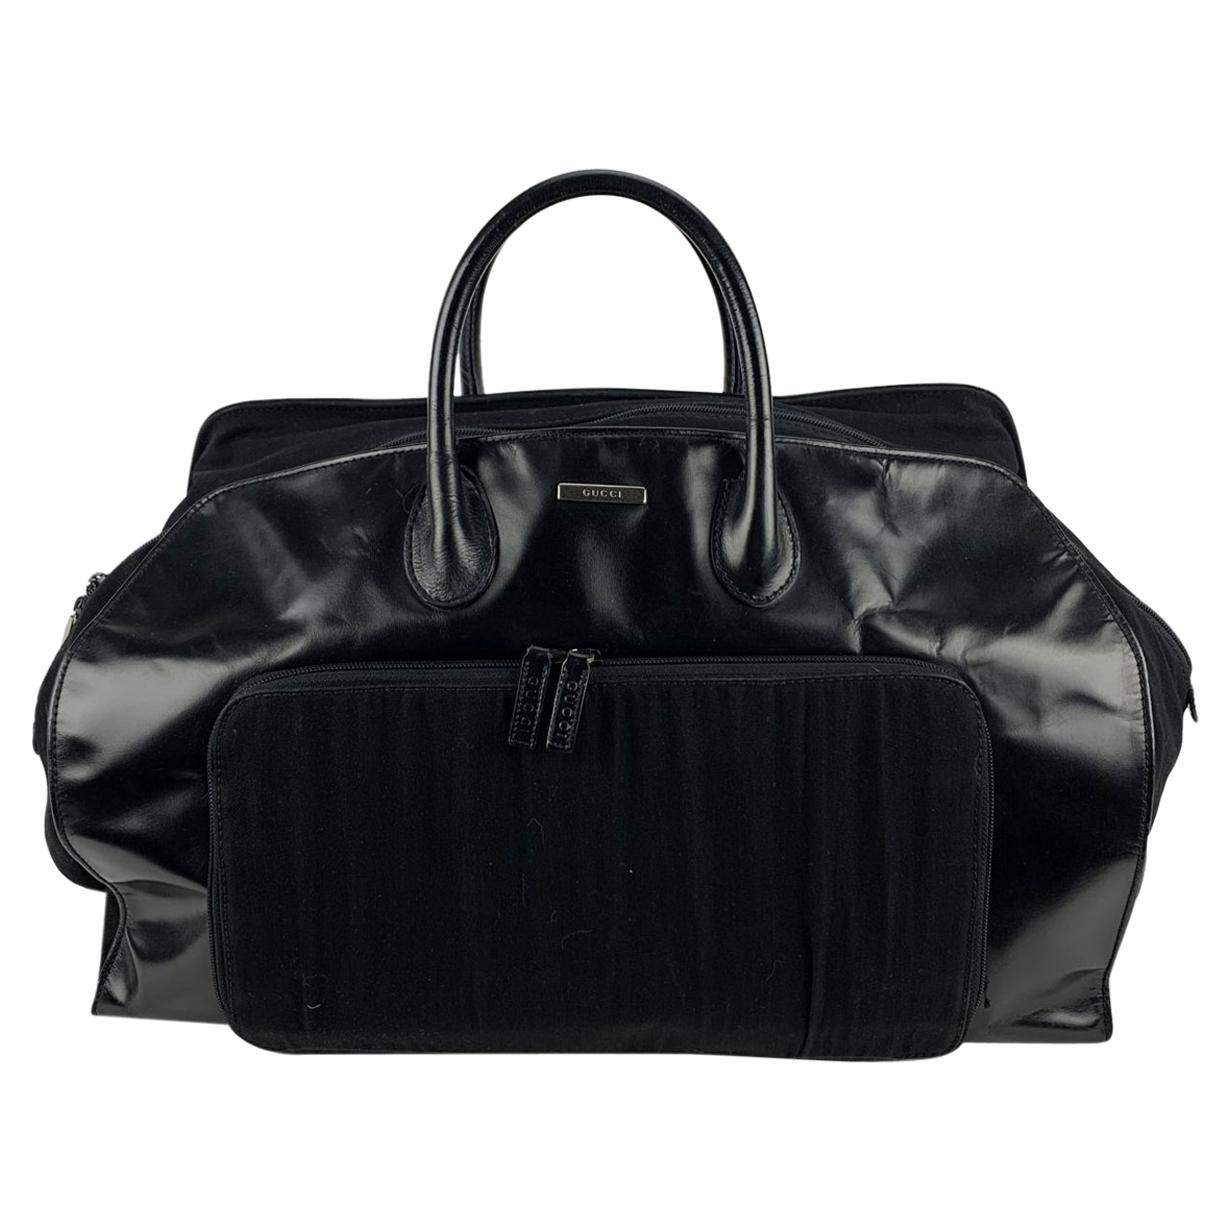 Gucci Black Canvas Leather Weekender Travel Duffle Duffel Bag